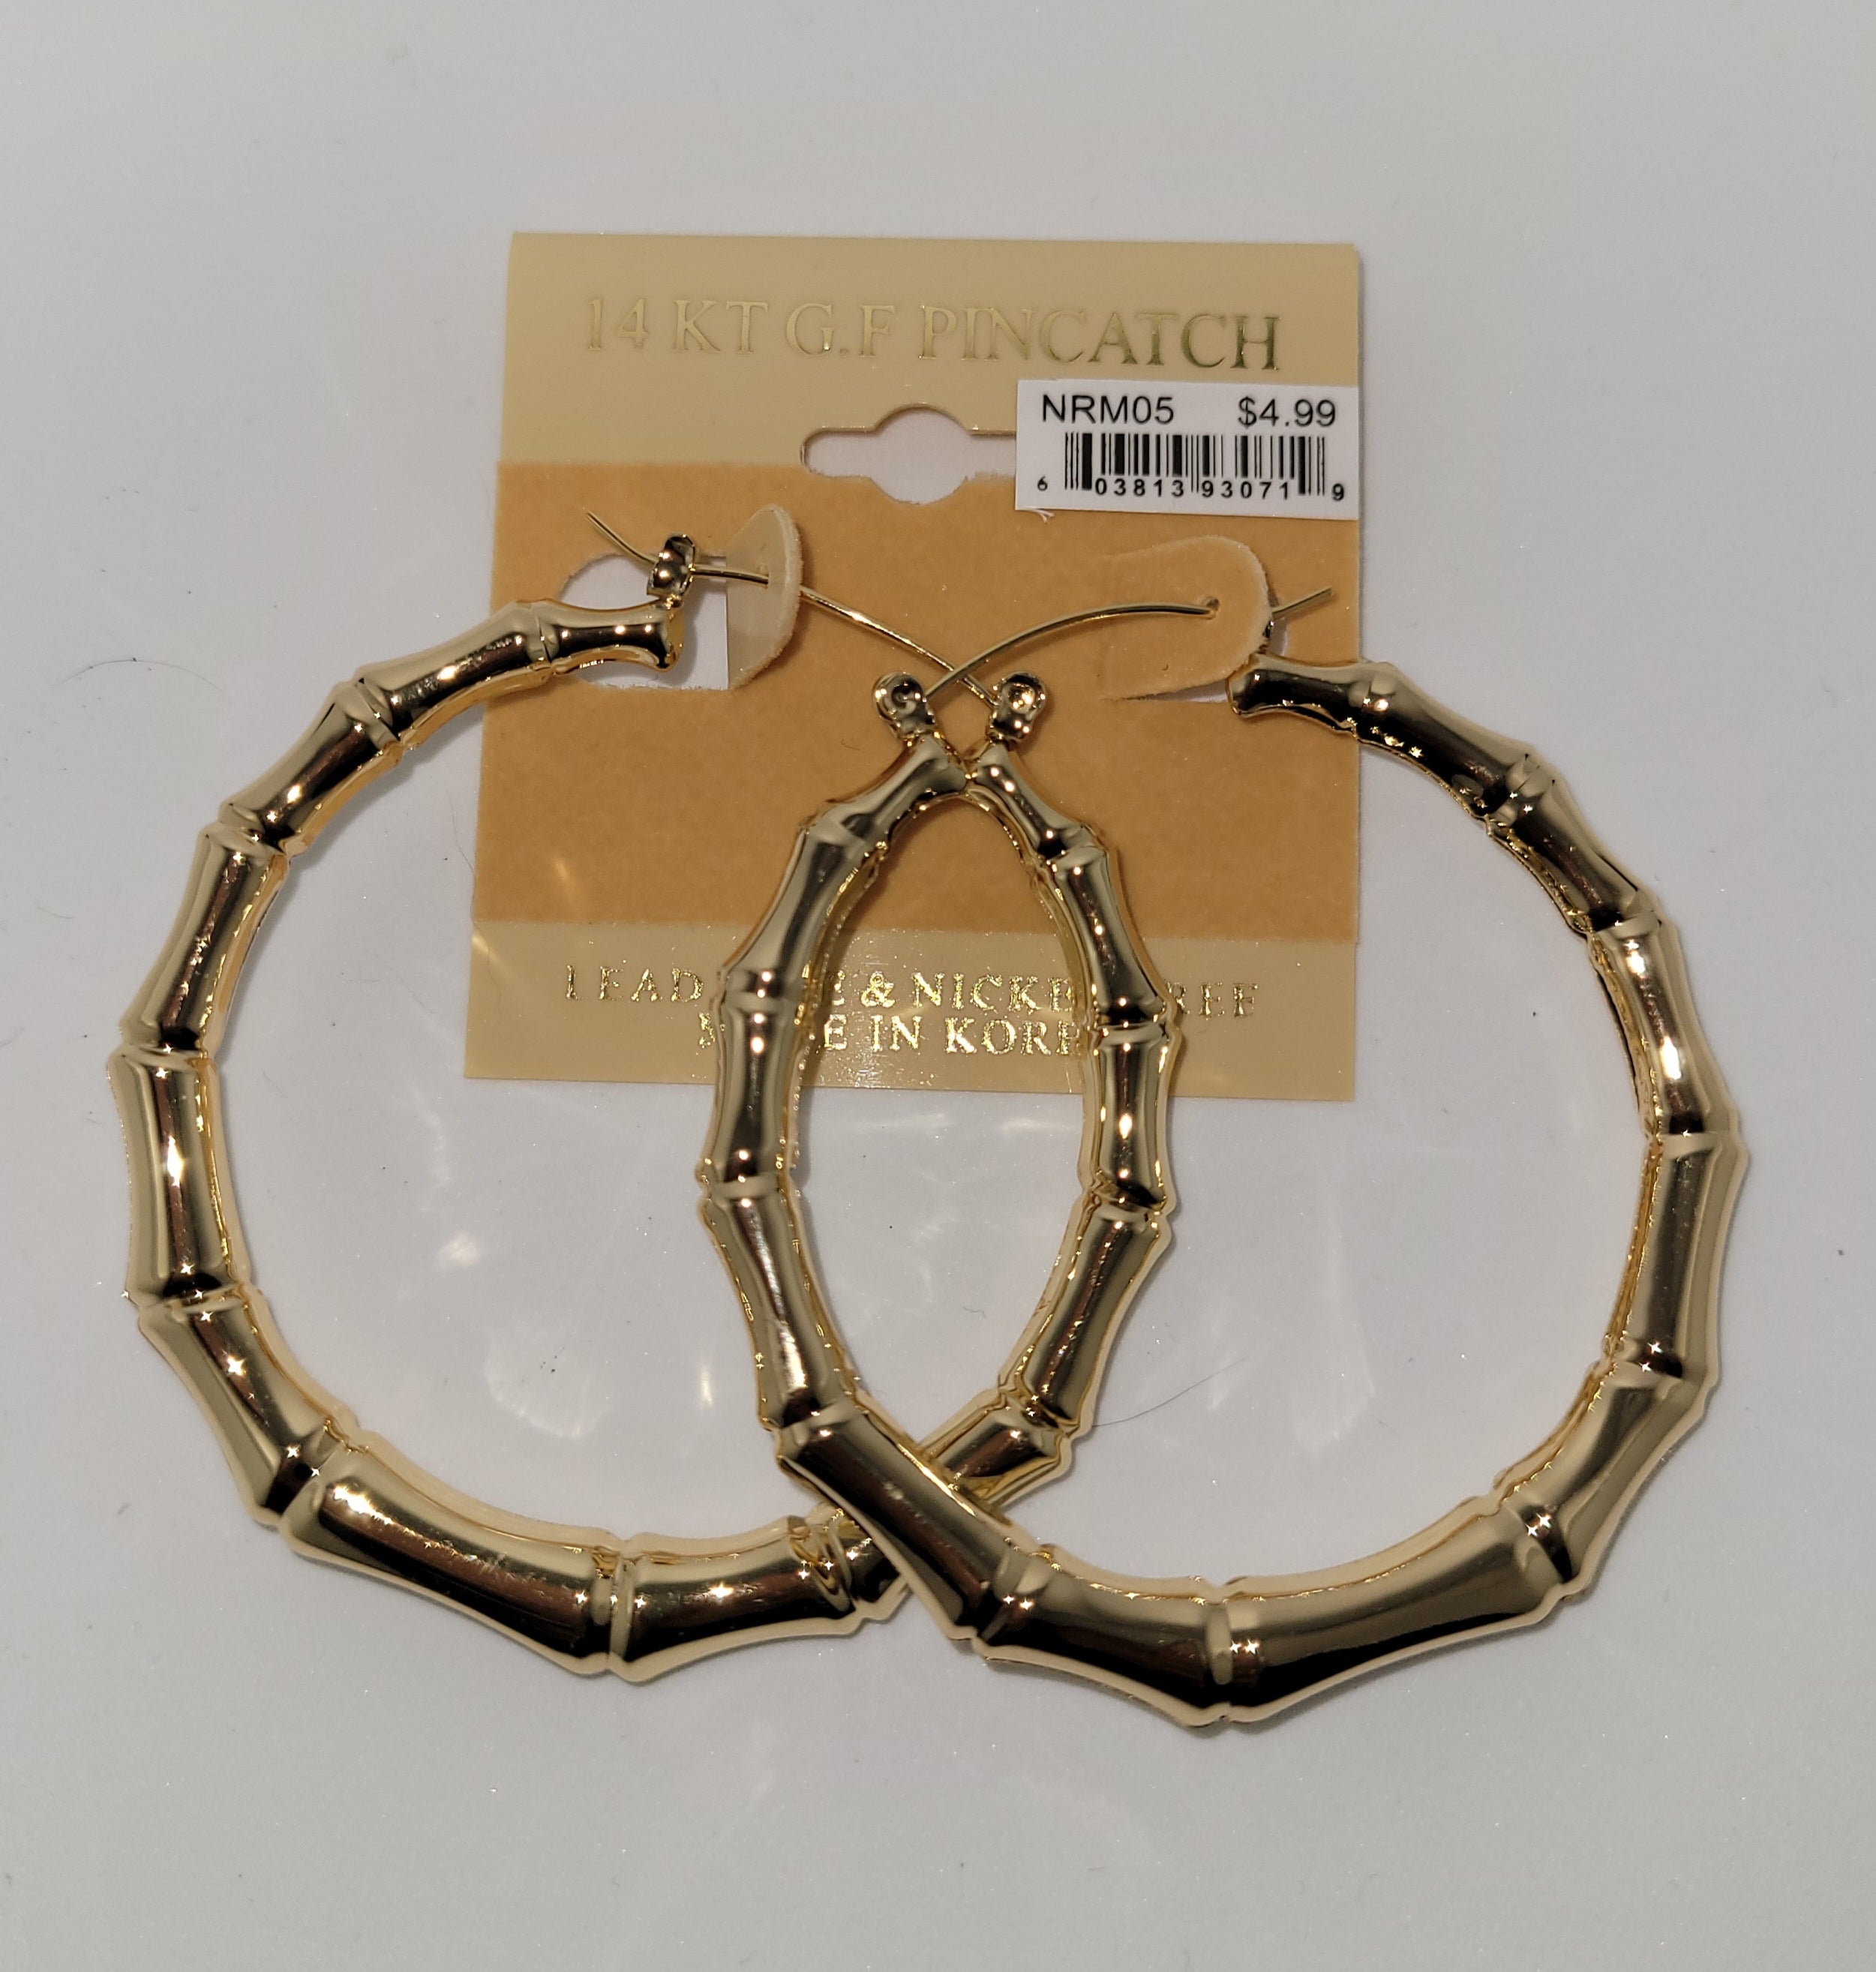 14 KT G.F Pincatch Gold Earring (NRM05)